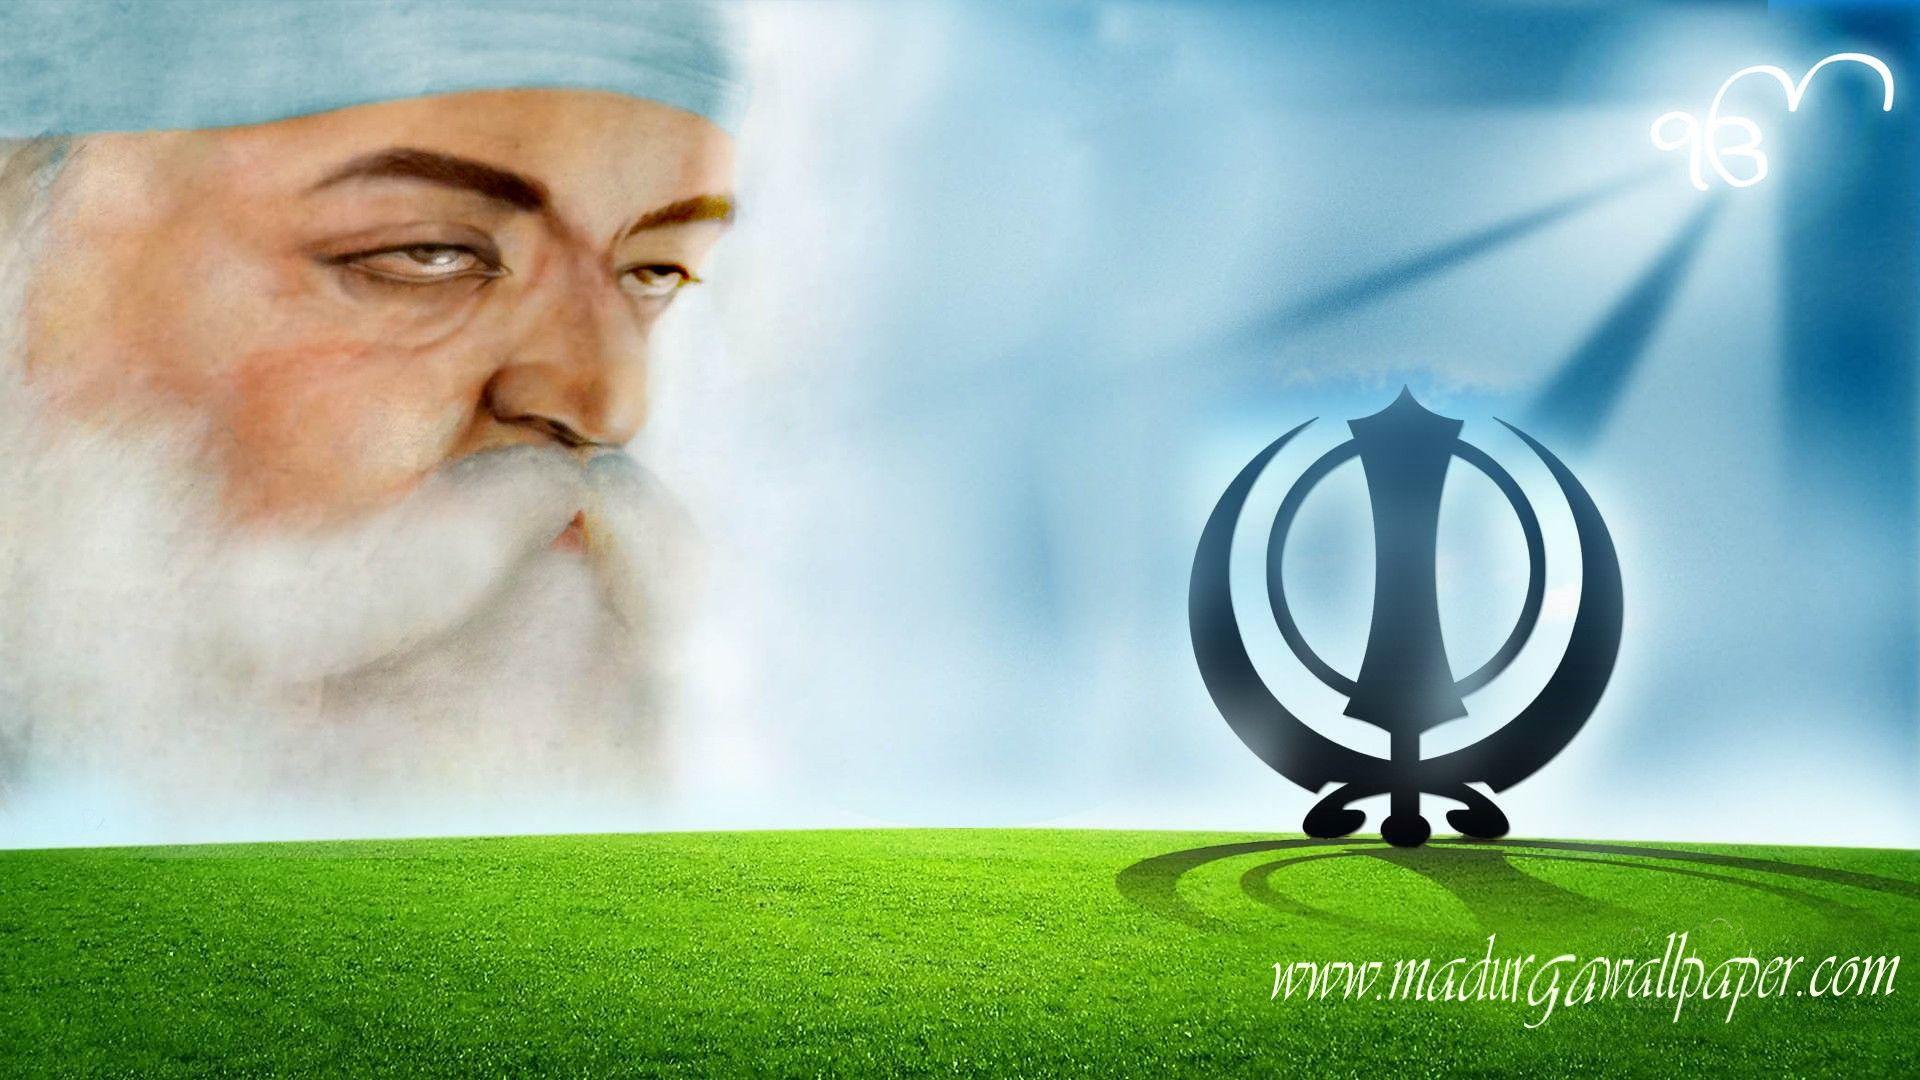 Guru Nanak Wallpaper & HD image